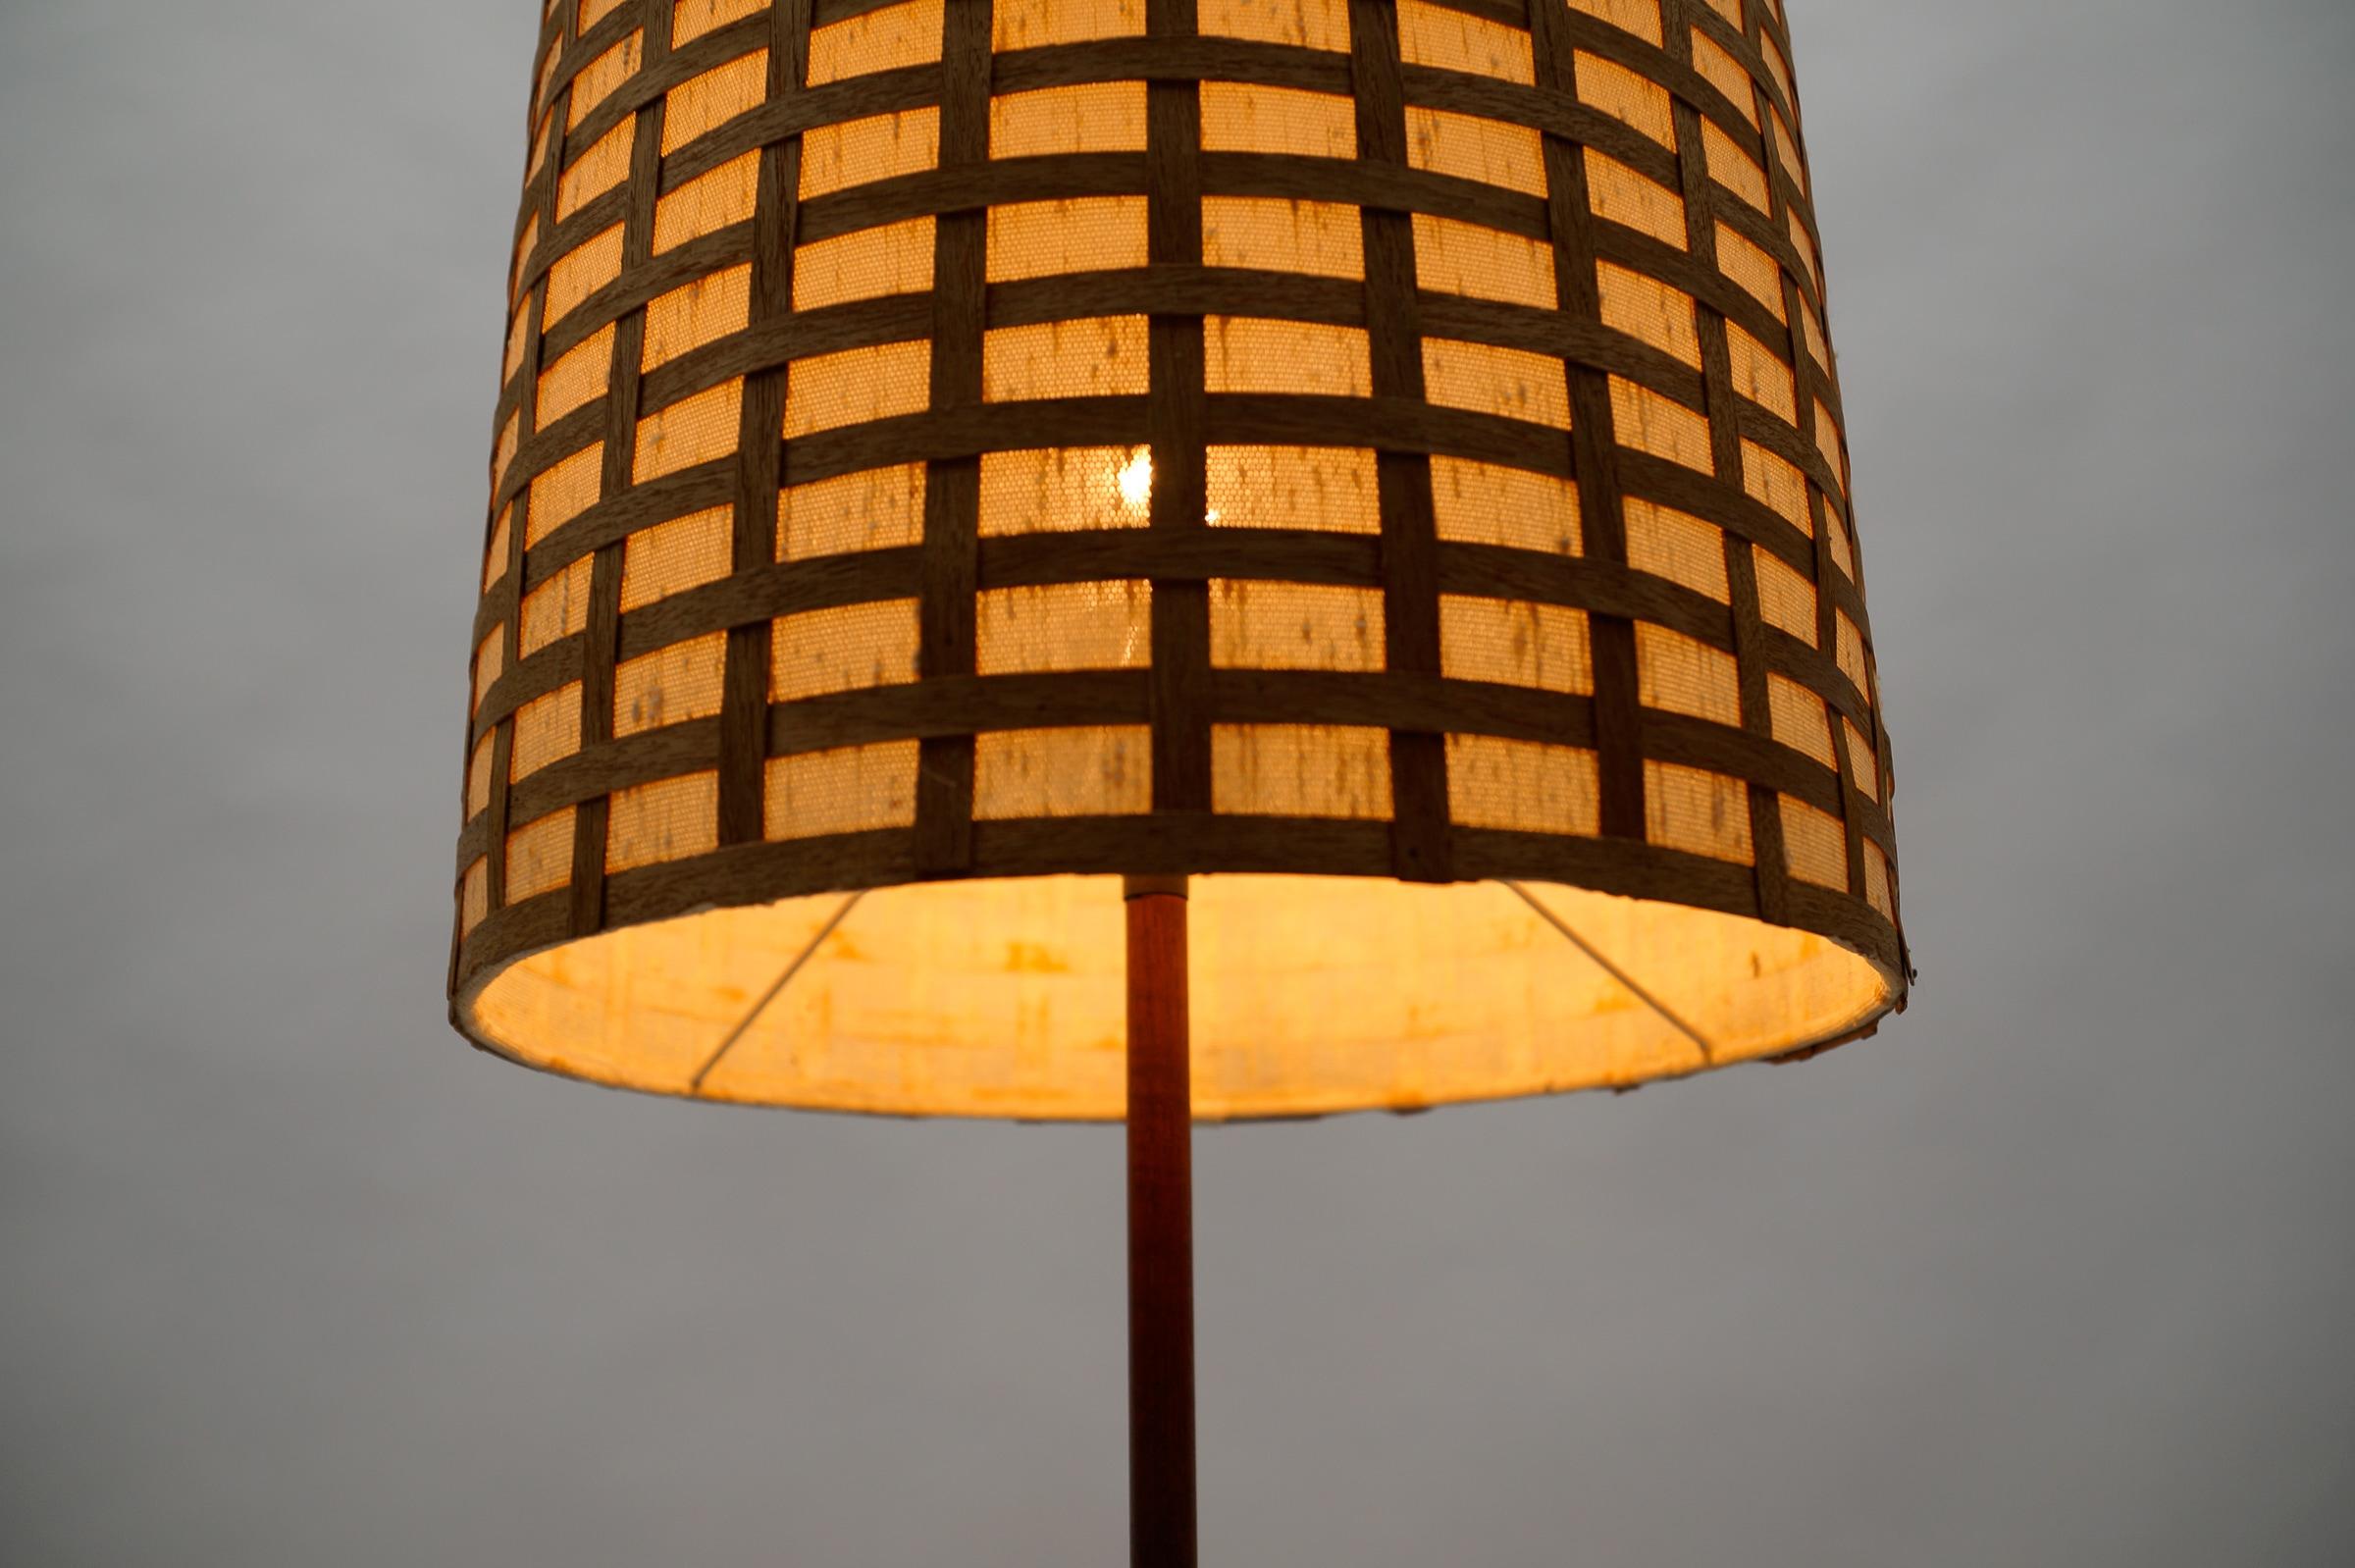  Mid-Century Modern Floor Lamp in Brass and Teak from Temde, 1960s Switzerland For Sale 3